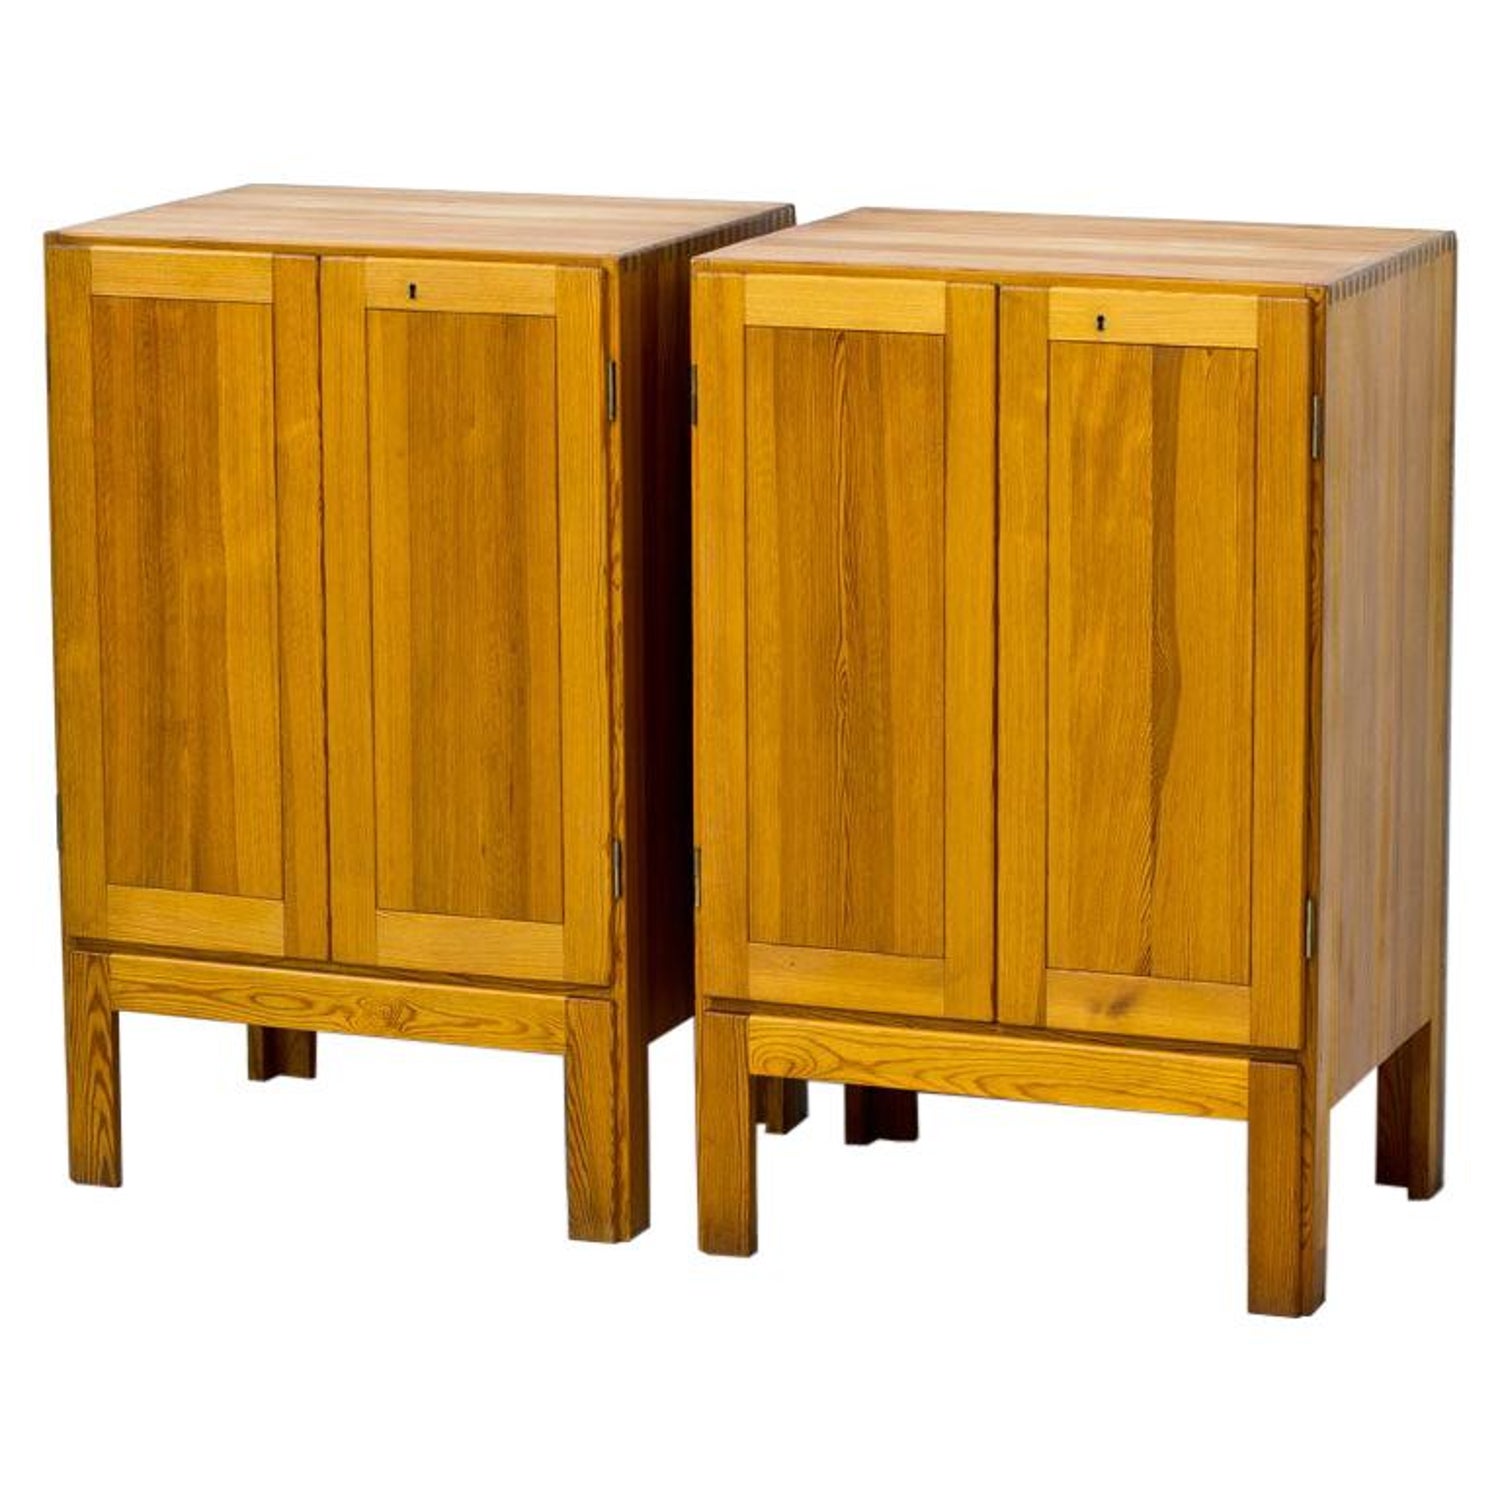 Oregon Pine Cabinets By Borge Mogensen 1960s Set Of 2 At 1stdibs